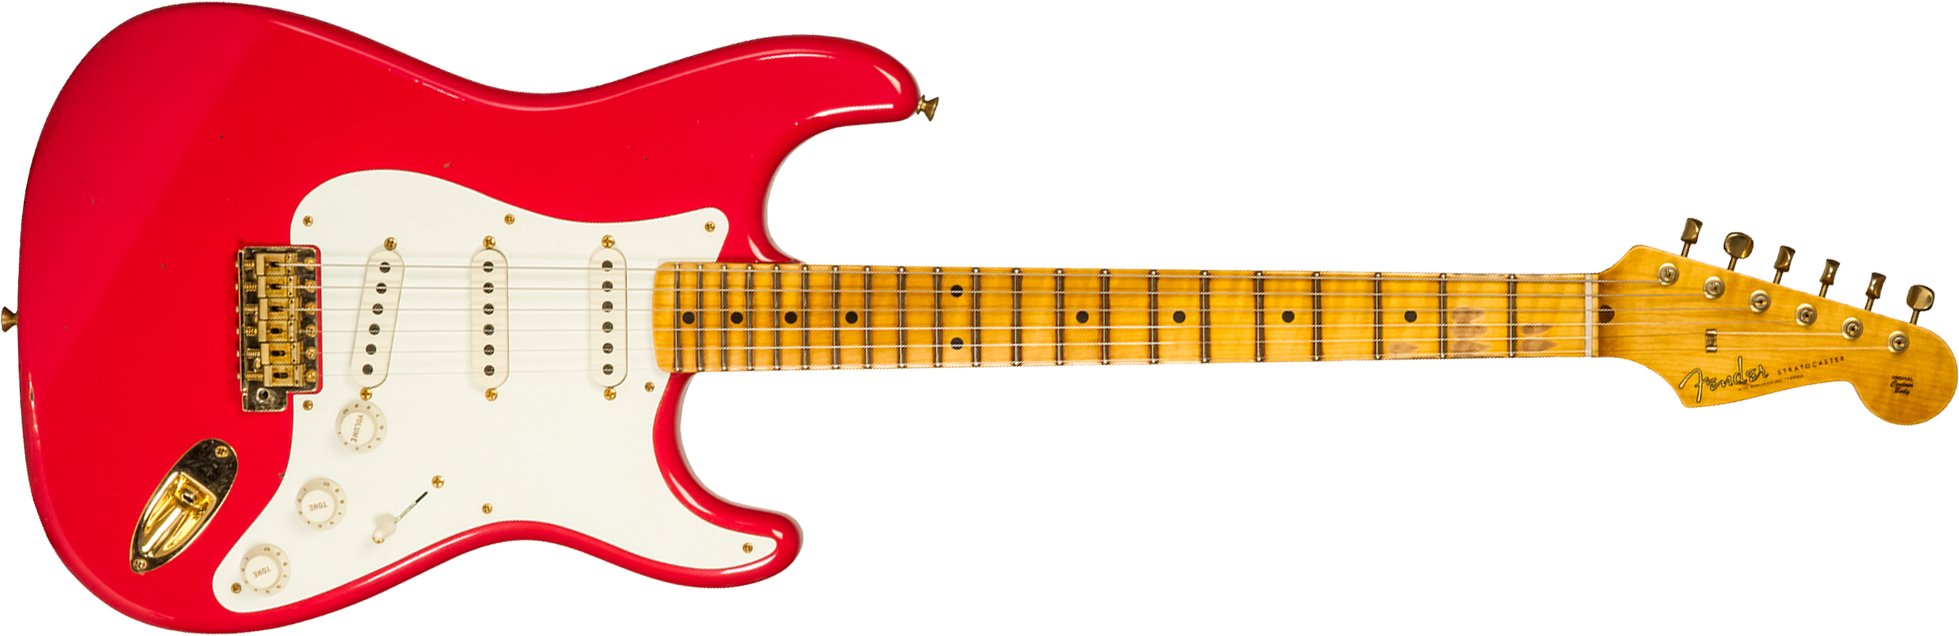 Fender Custom Shop Strat 1956 3s Trem Mn #r130433 - Journeyman Relic Fiesta Red - Str shape electric guitar - Main picture